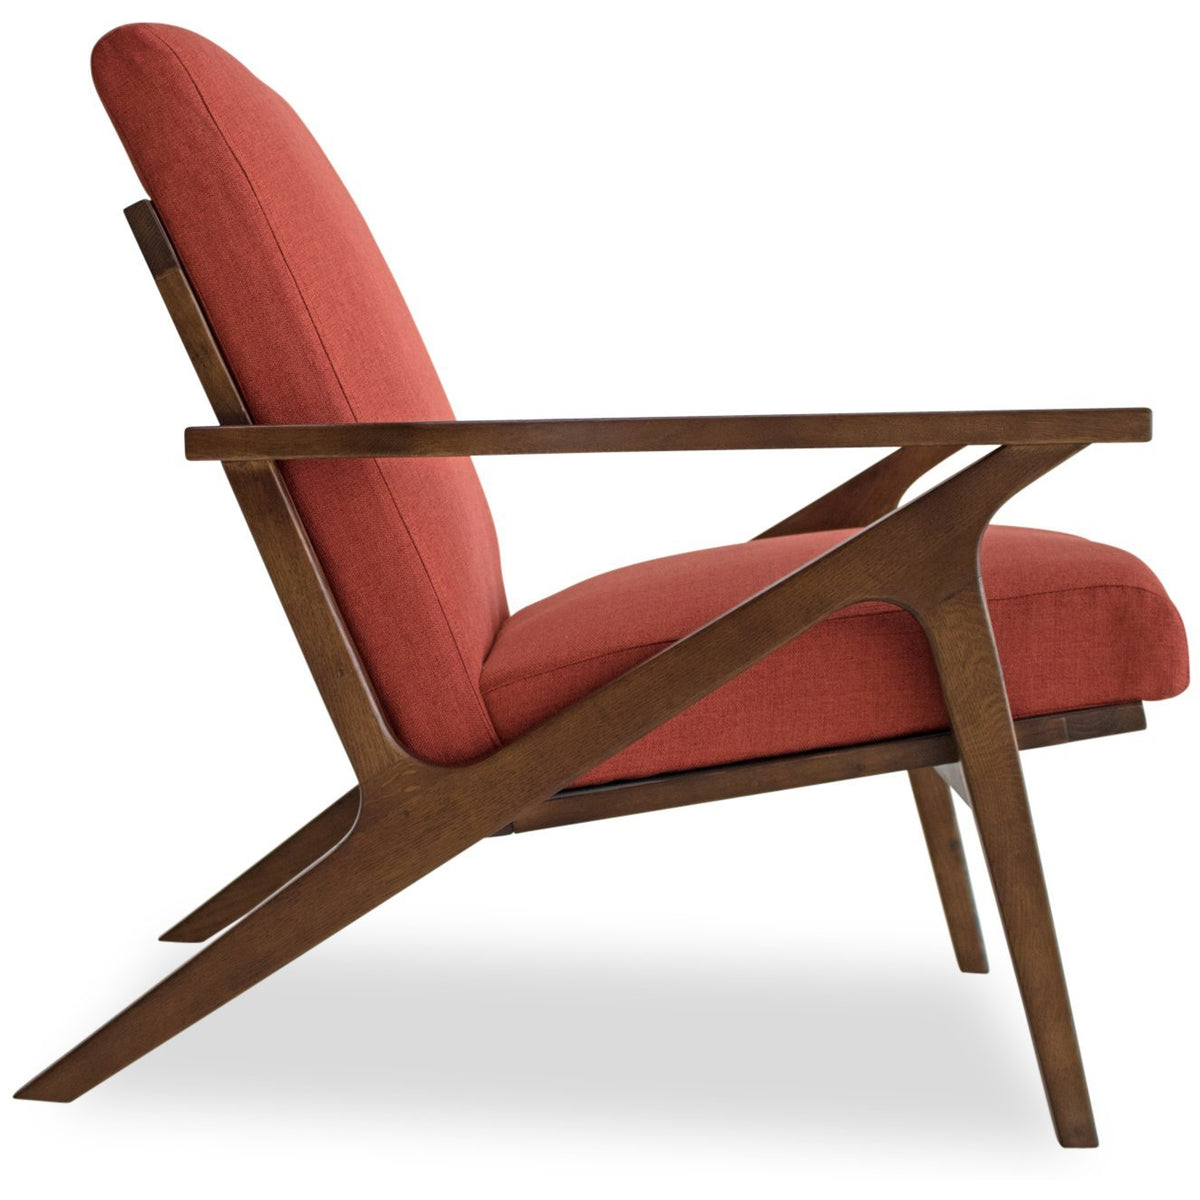 Edloe Finch Adalyn Mid-Century Modern Accent Chair in Red Orange